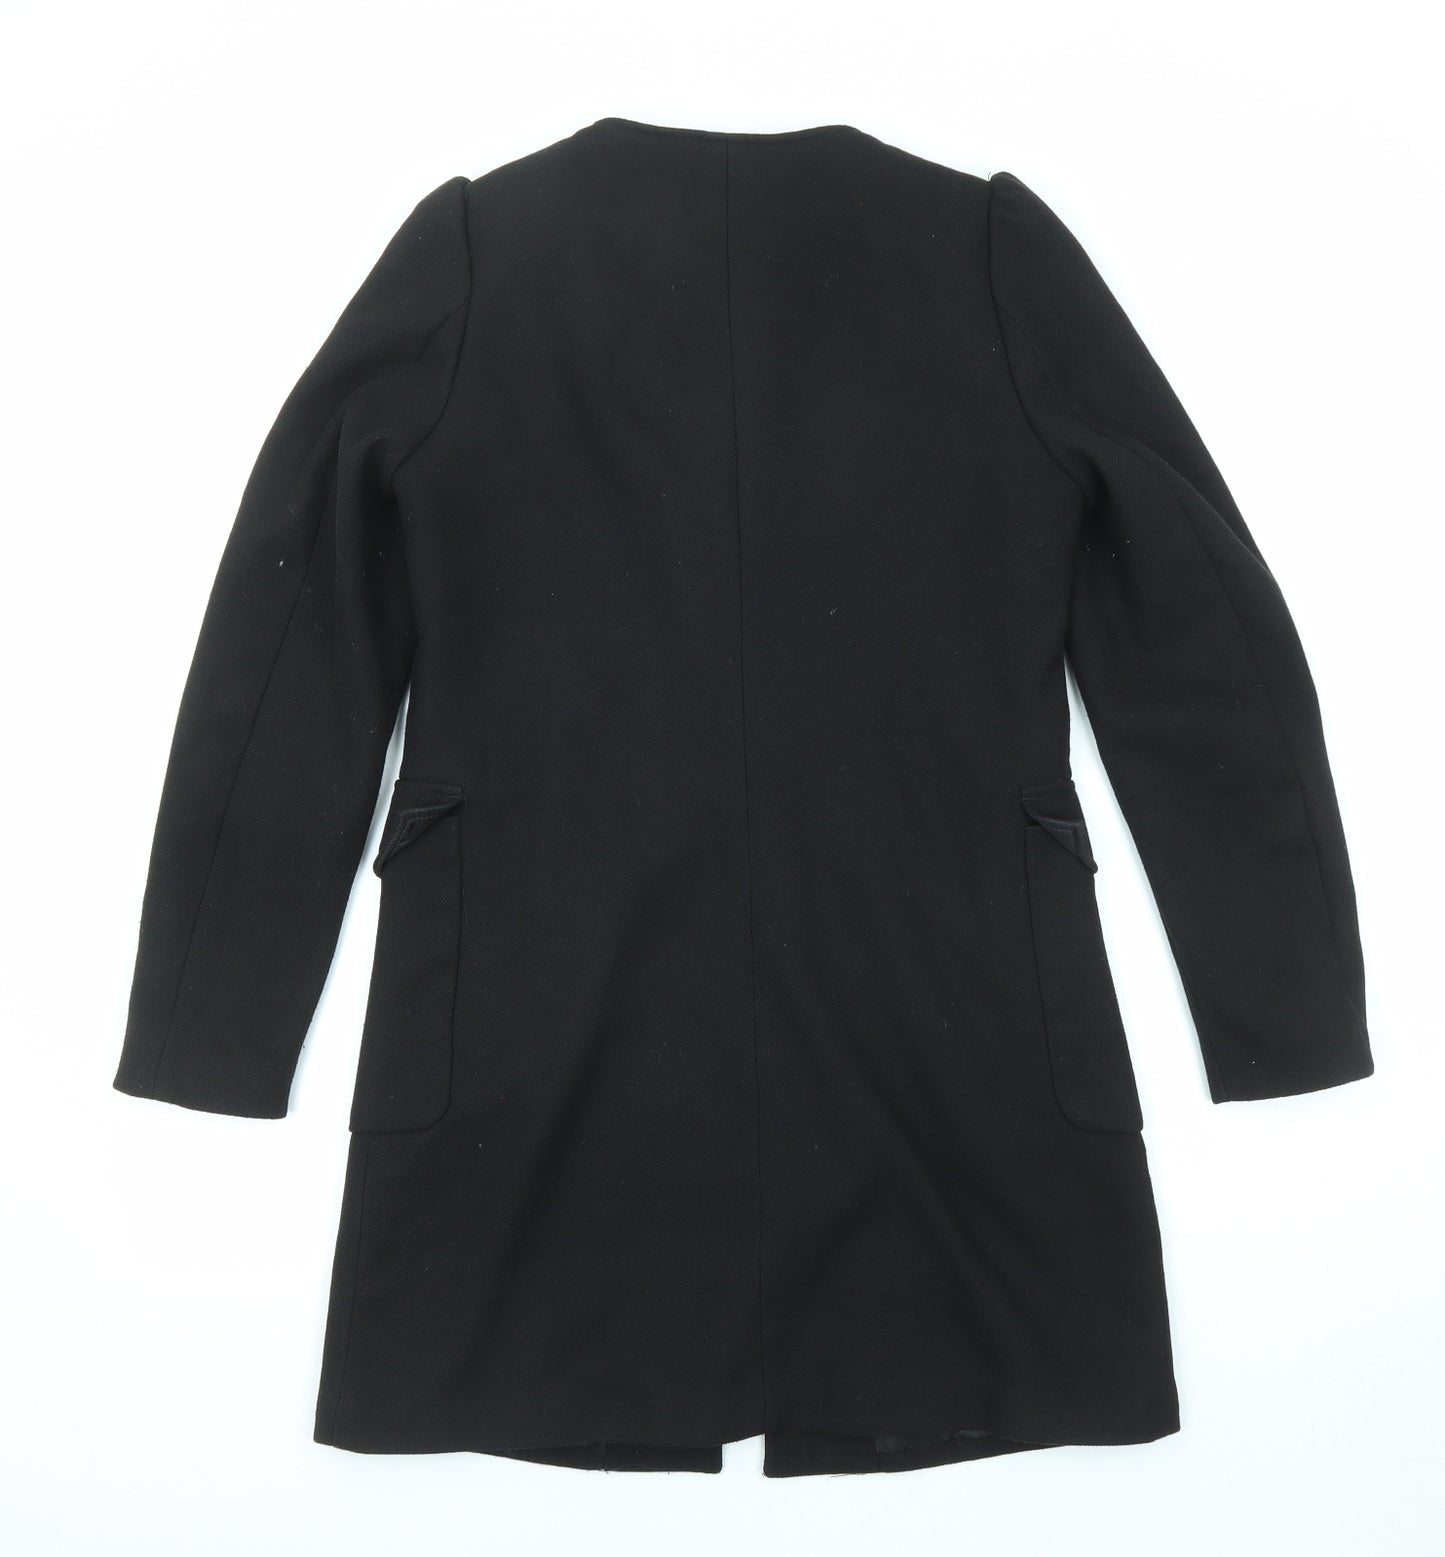 H&M Womens Black Jacket Size 10 Zip